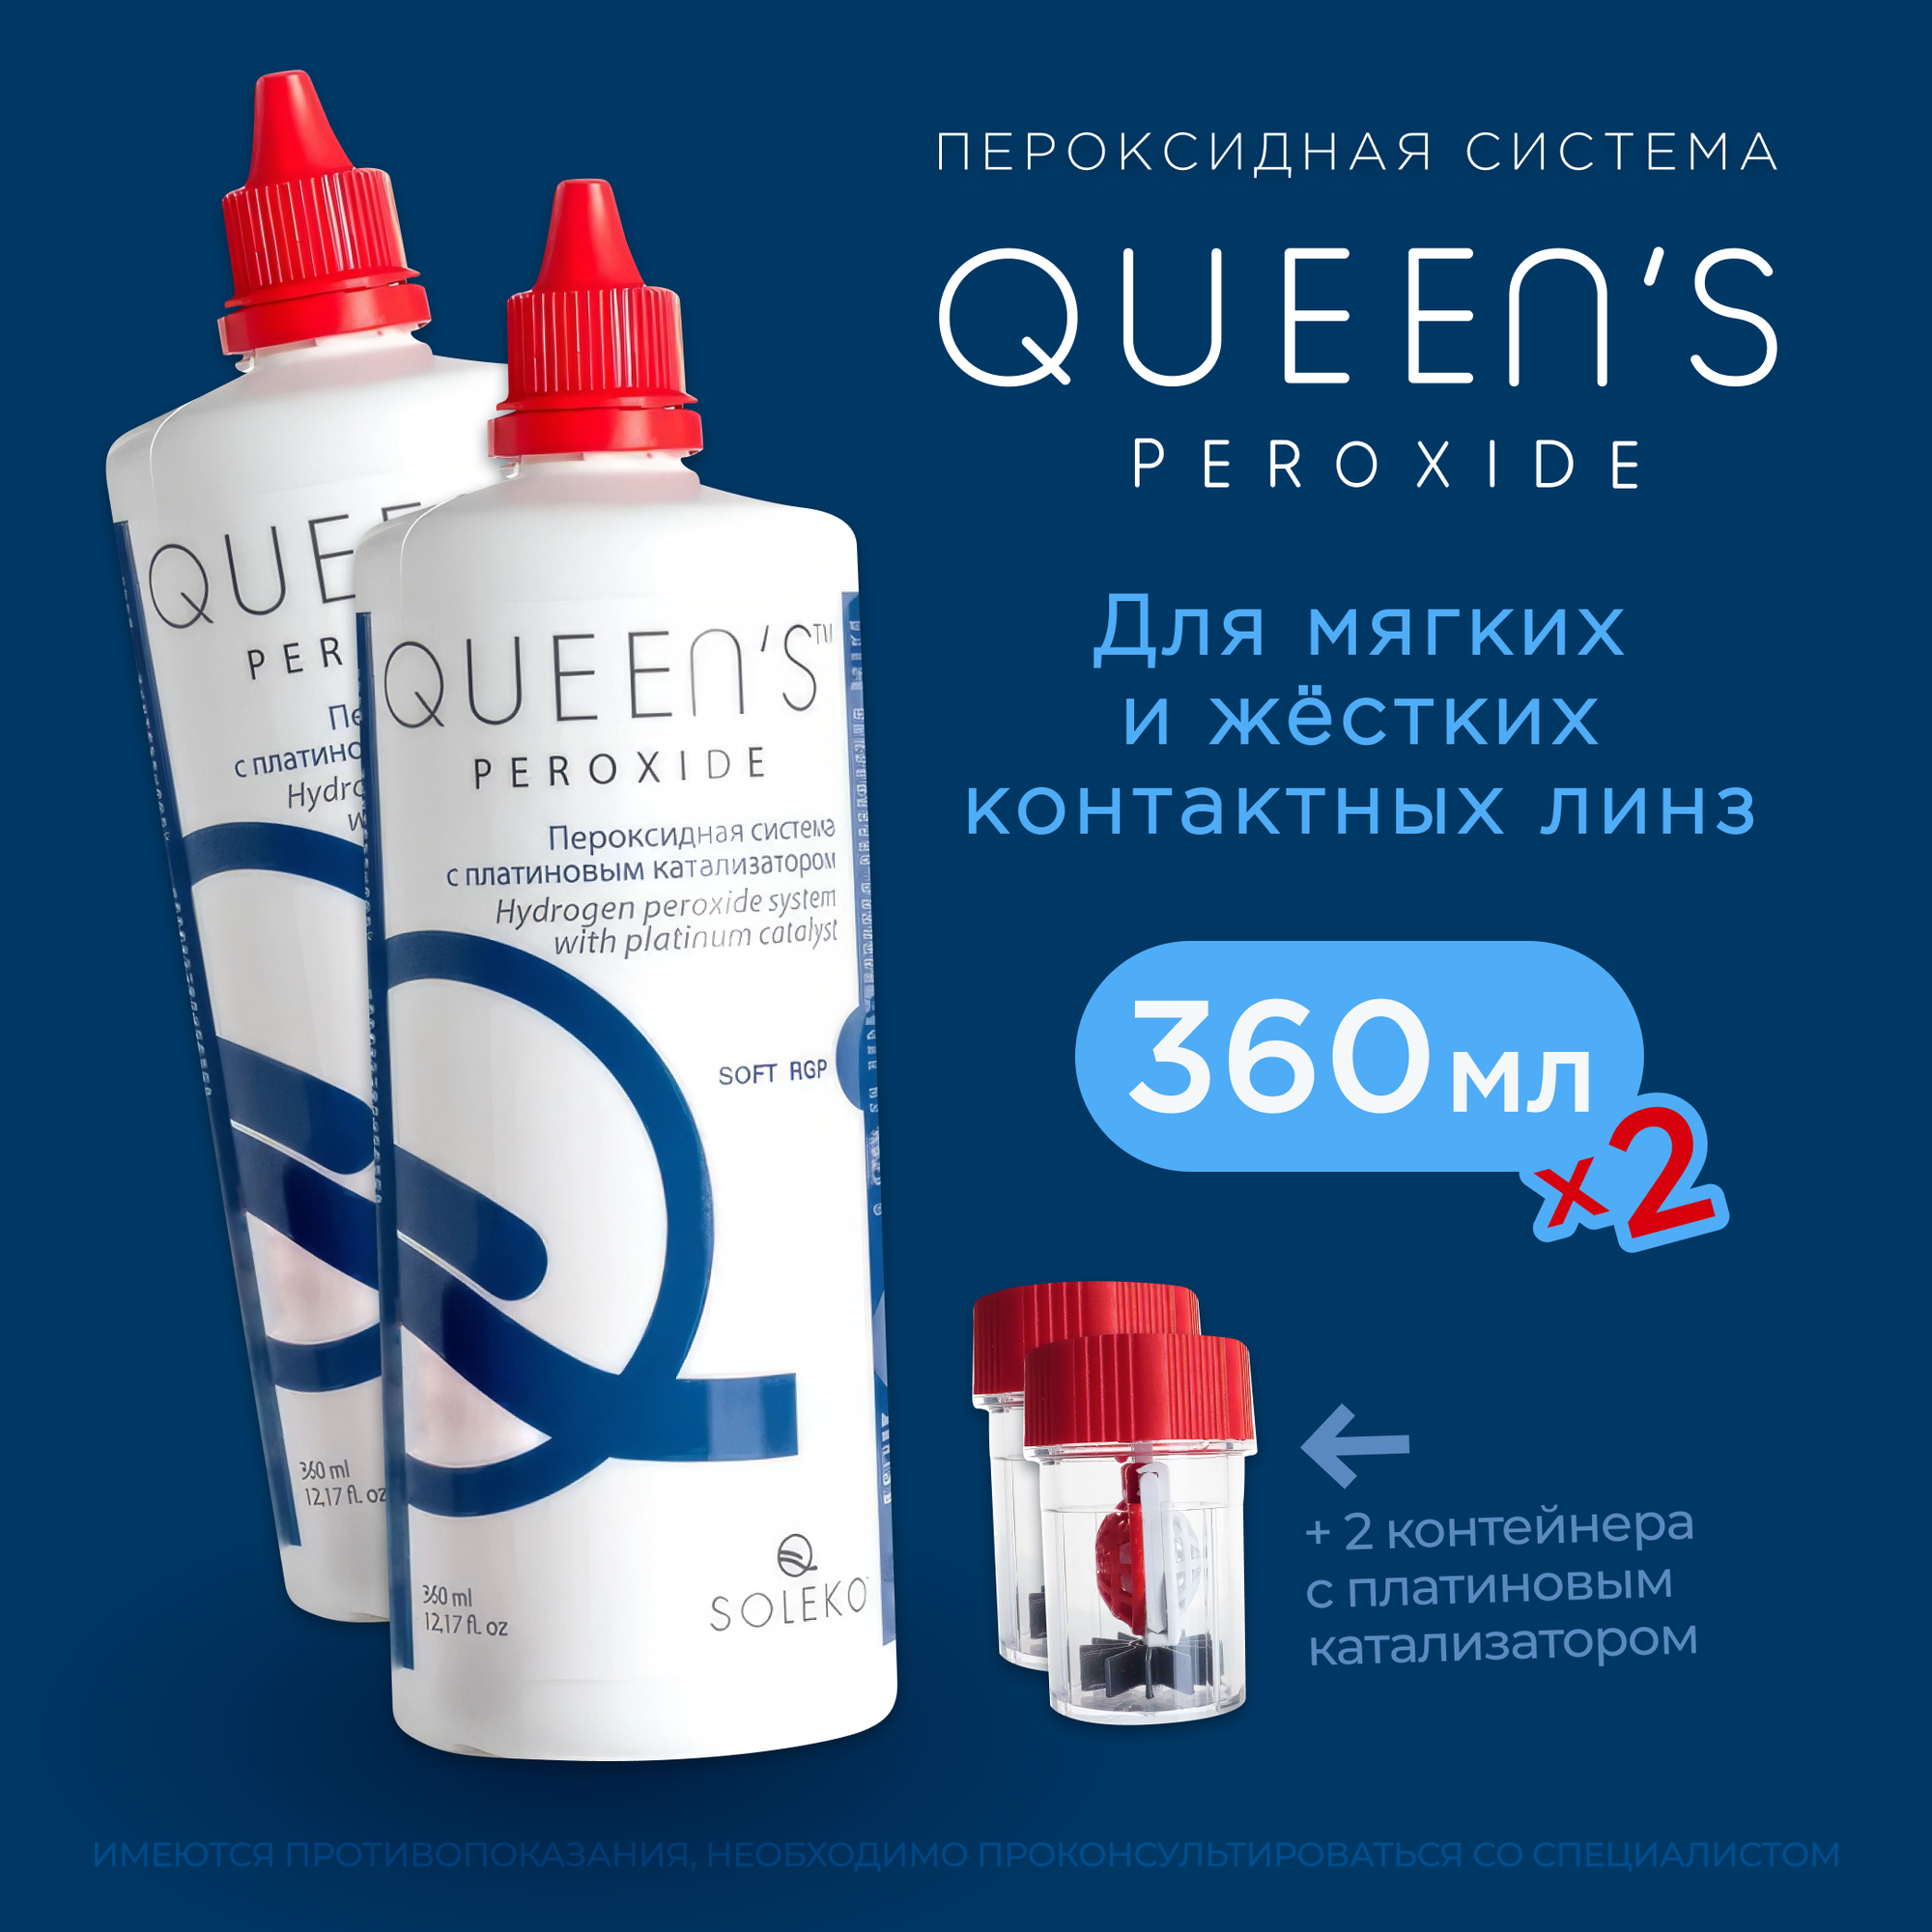 Раствор пероксидный Soleko Queen's Peroxide, 360 мл - 2 шт.